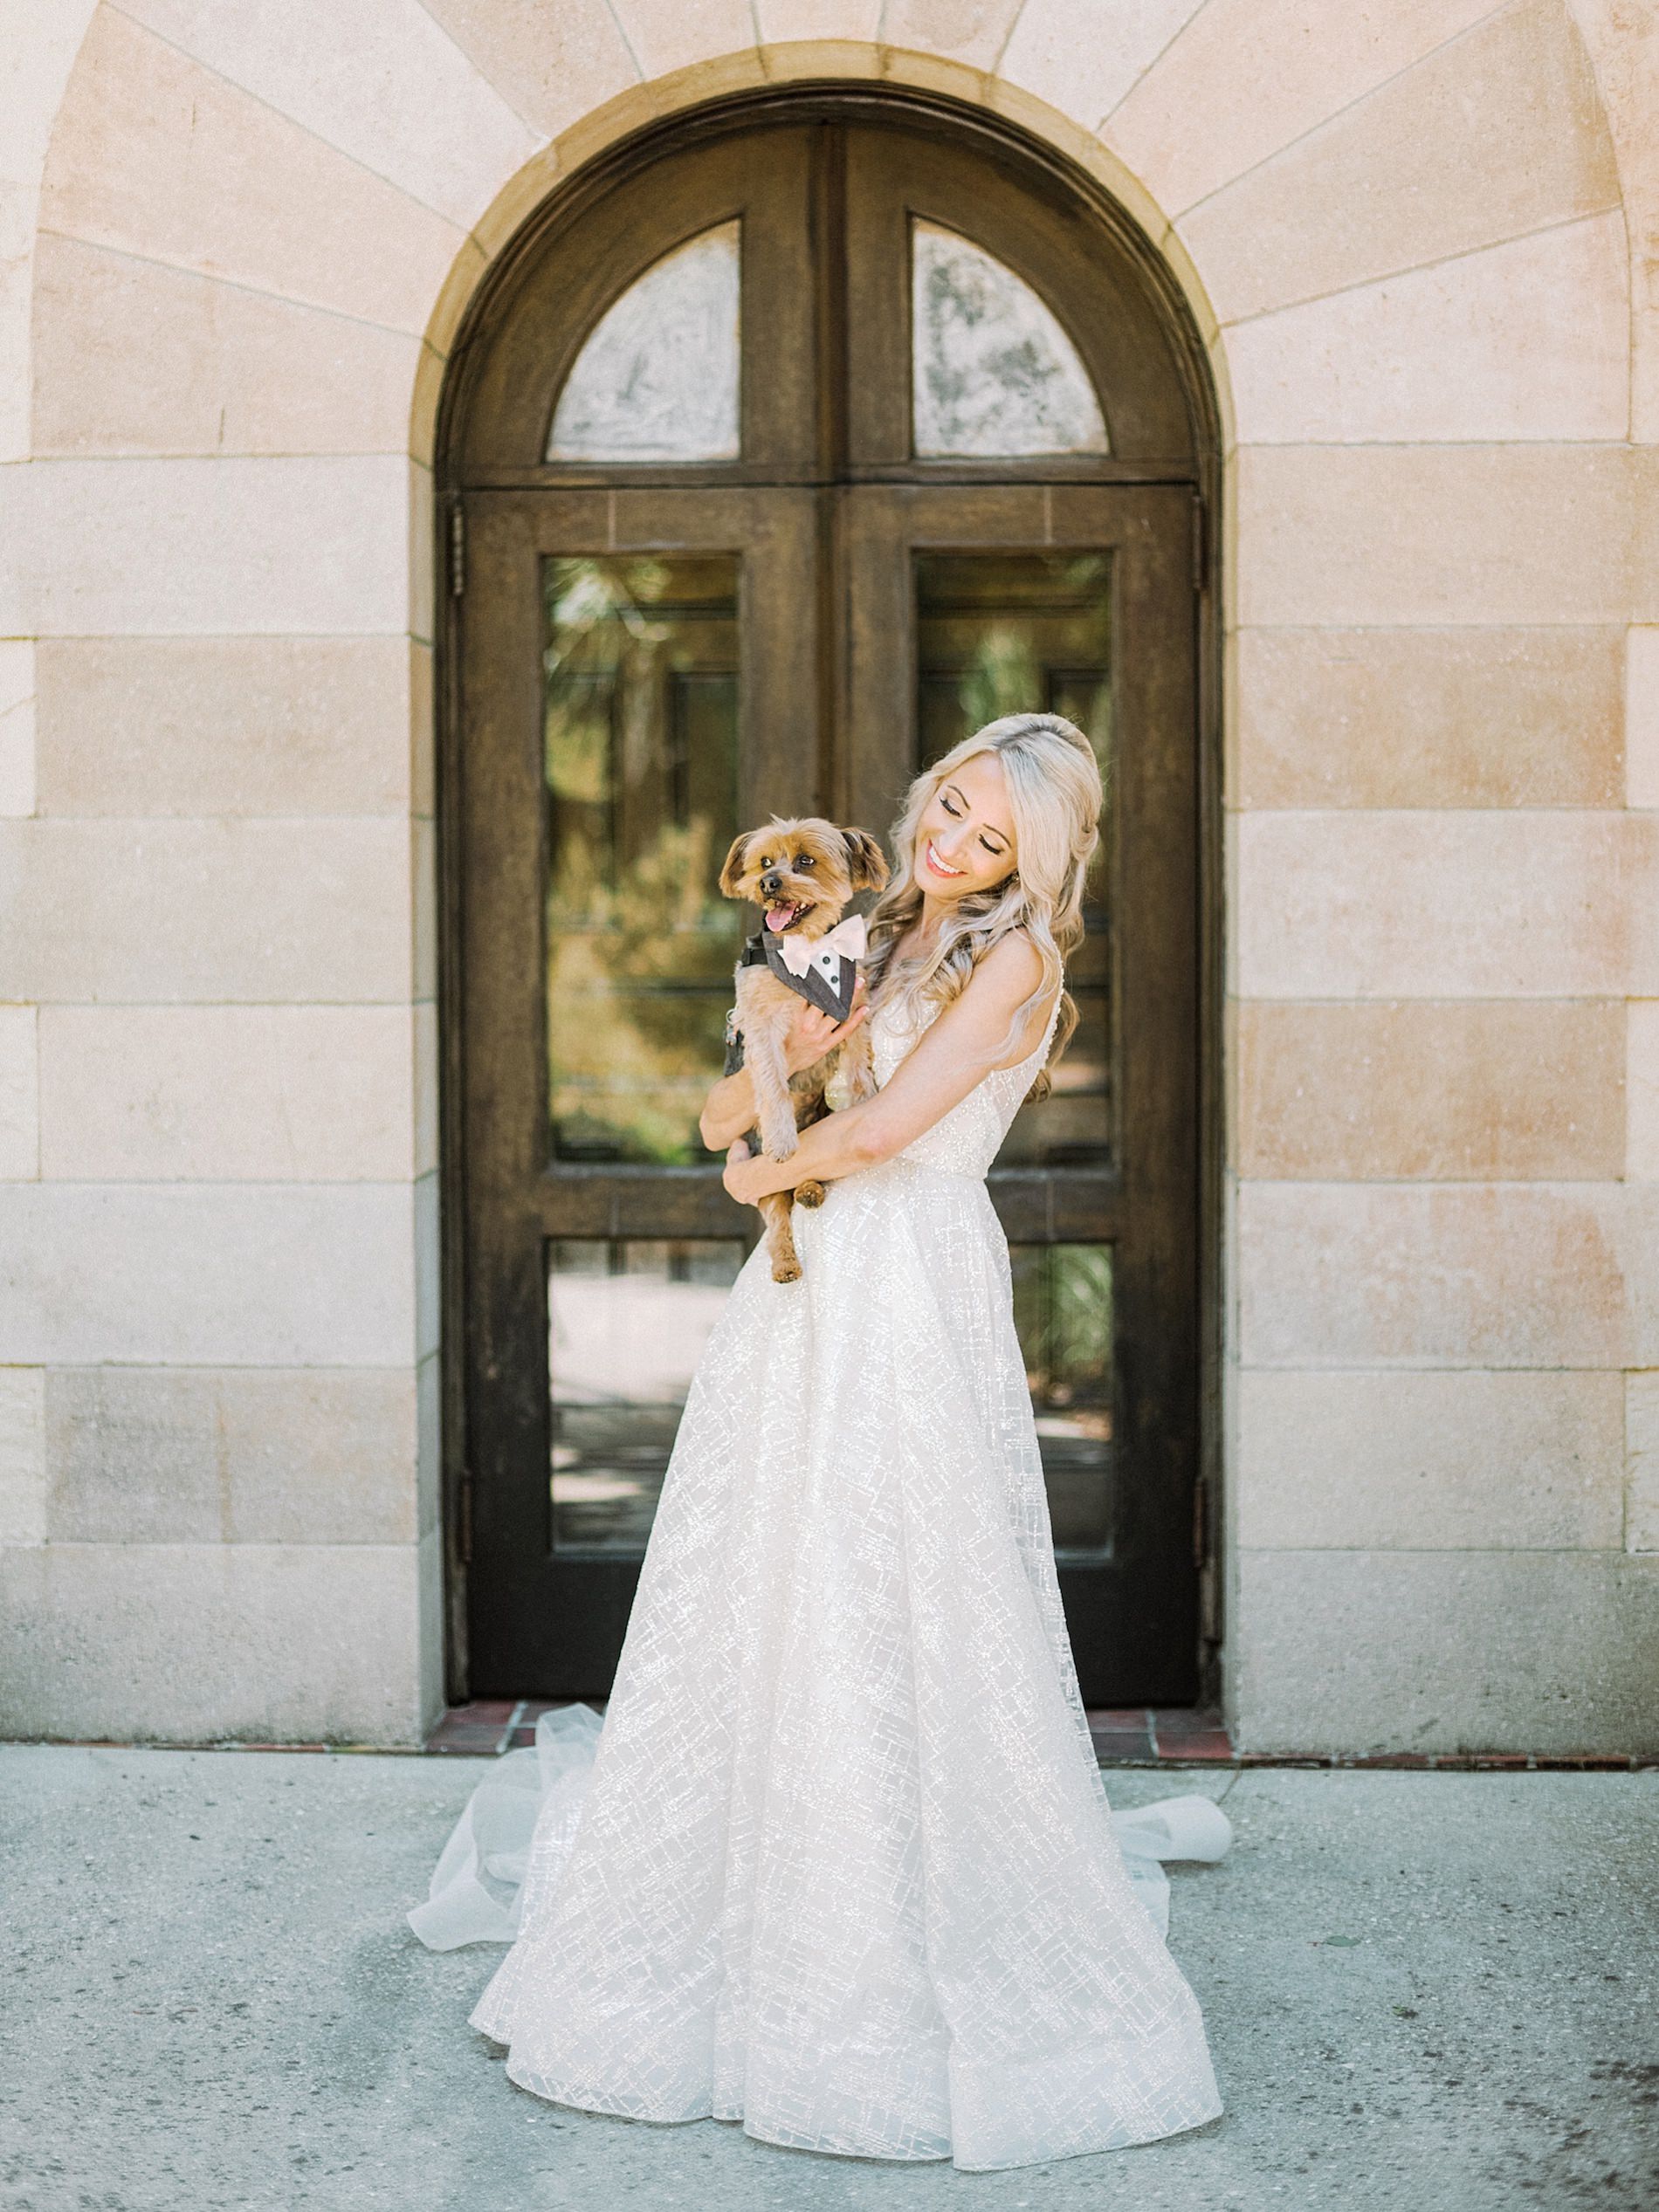 Sarasota Bride in Romantic Lazaro Ballgown Wedding Dress Holding Dog in Tuxedo